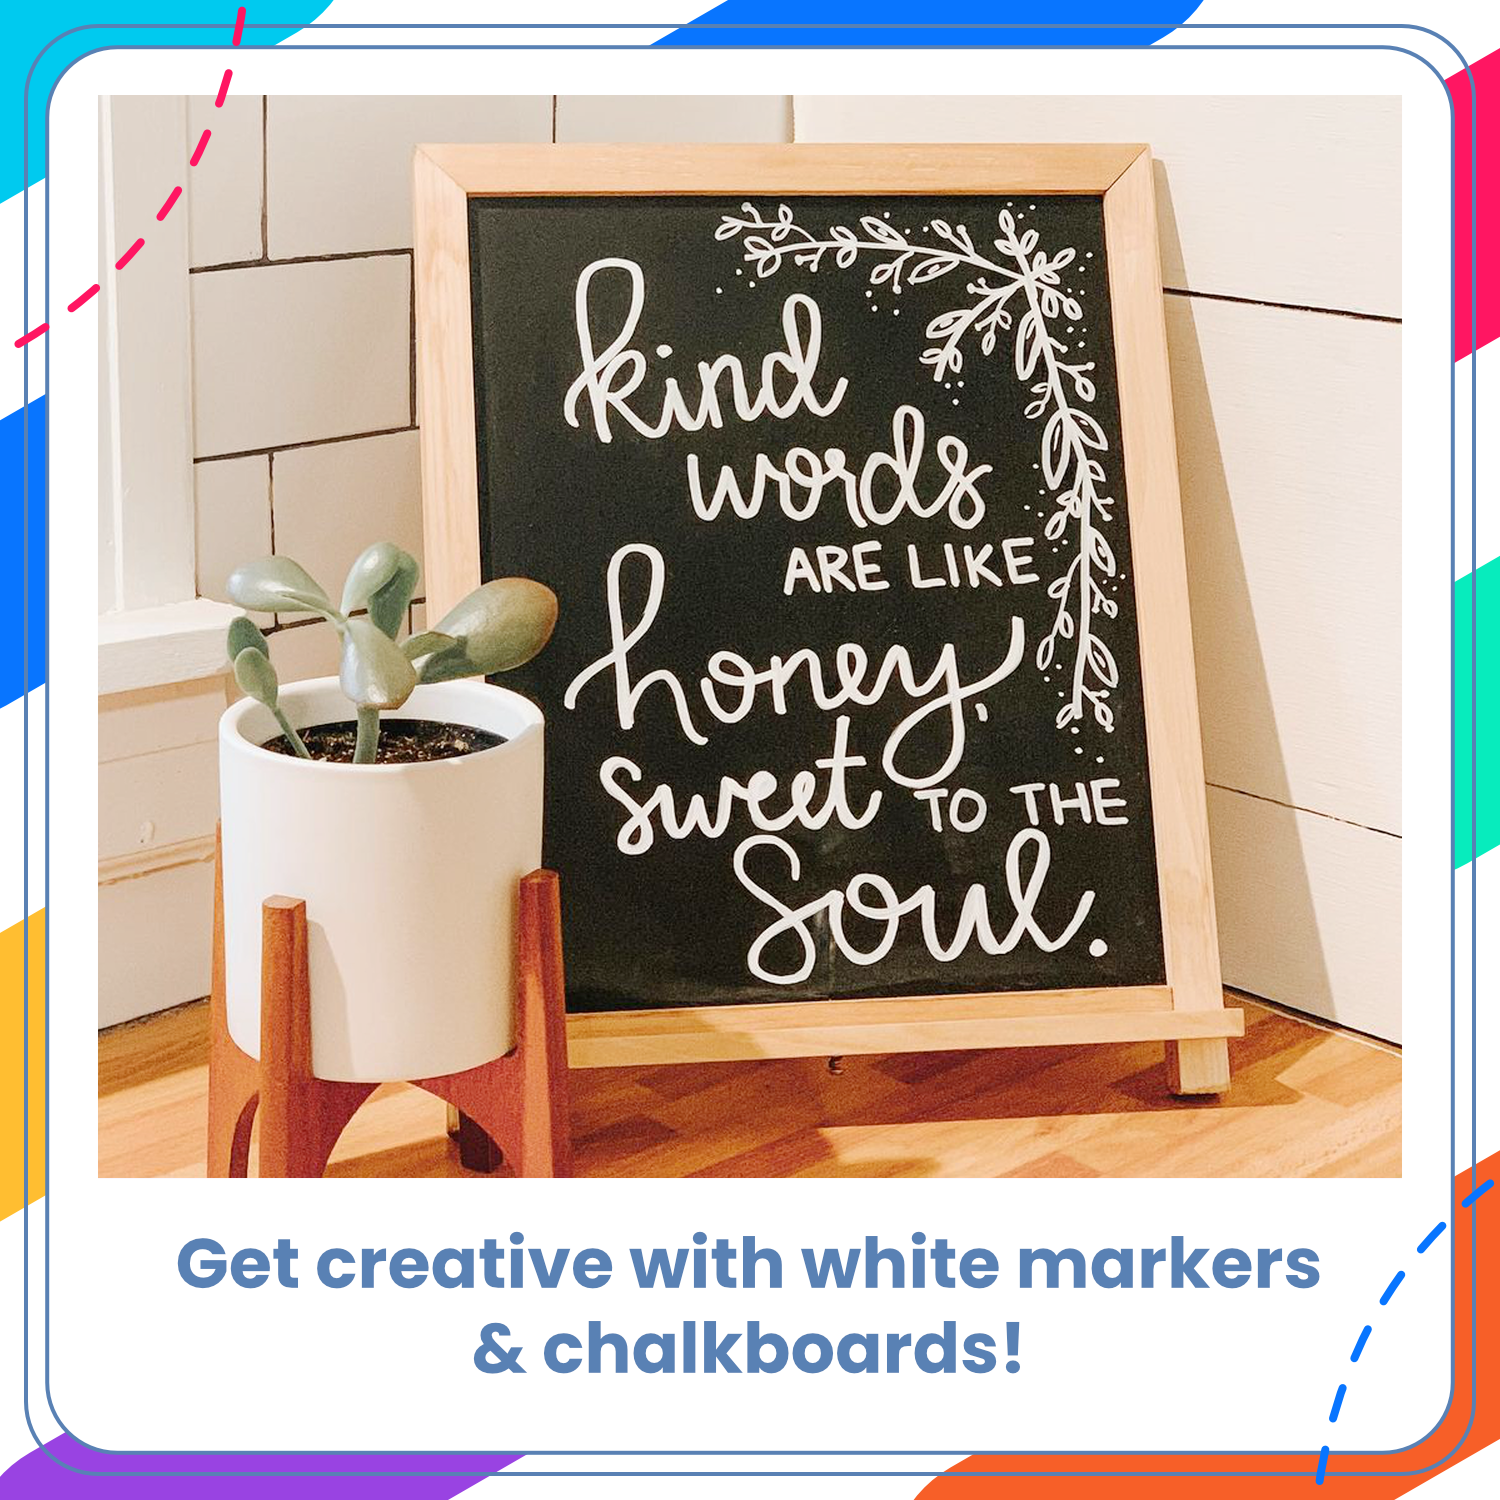 Creatov Liquid Chalkboard Window Chalk Markers 12 Pack - Multi - Great Gift Idea